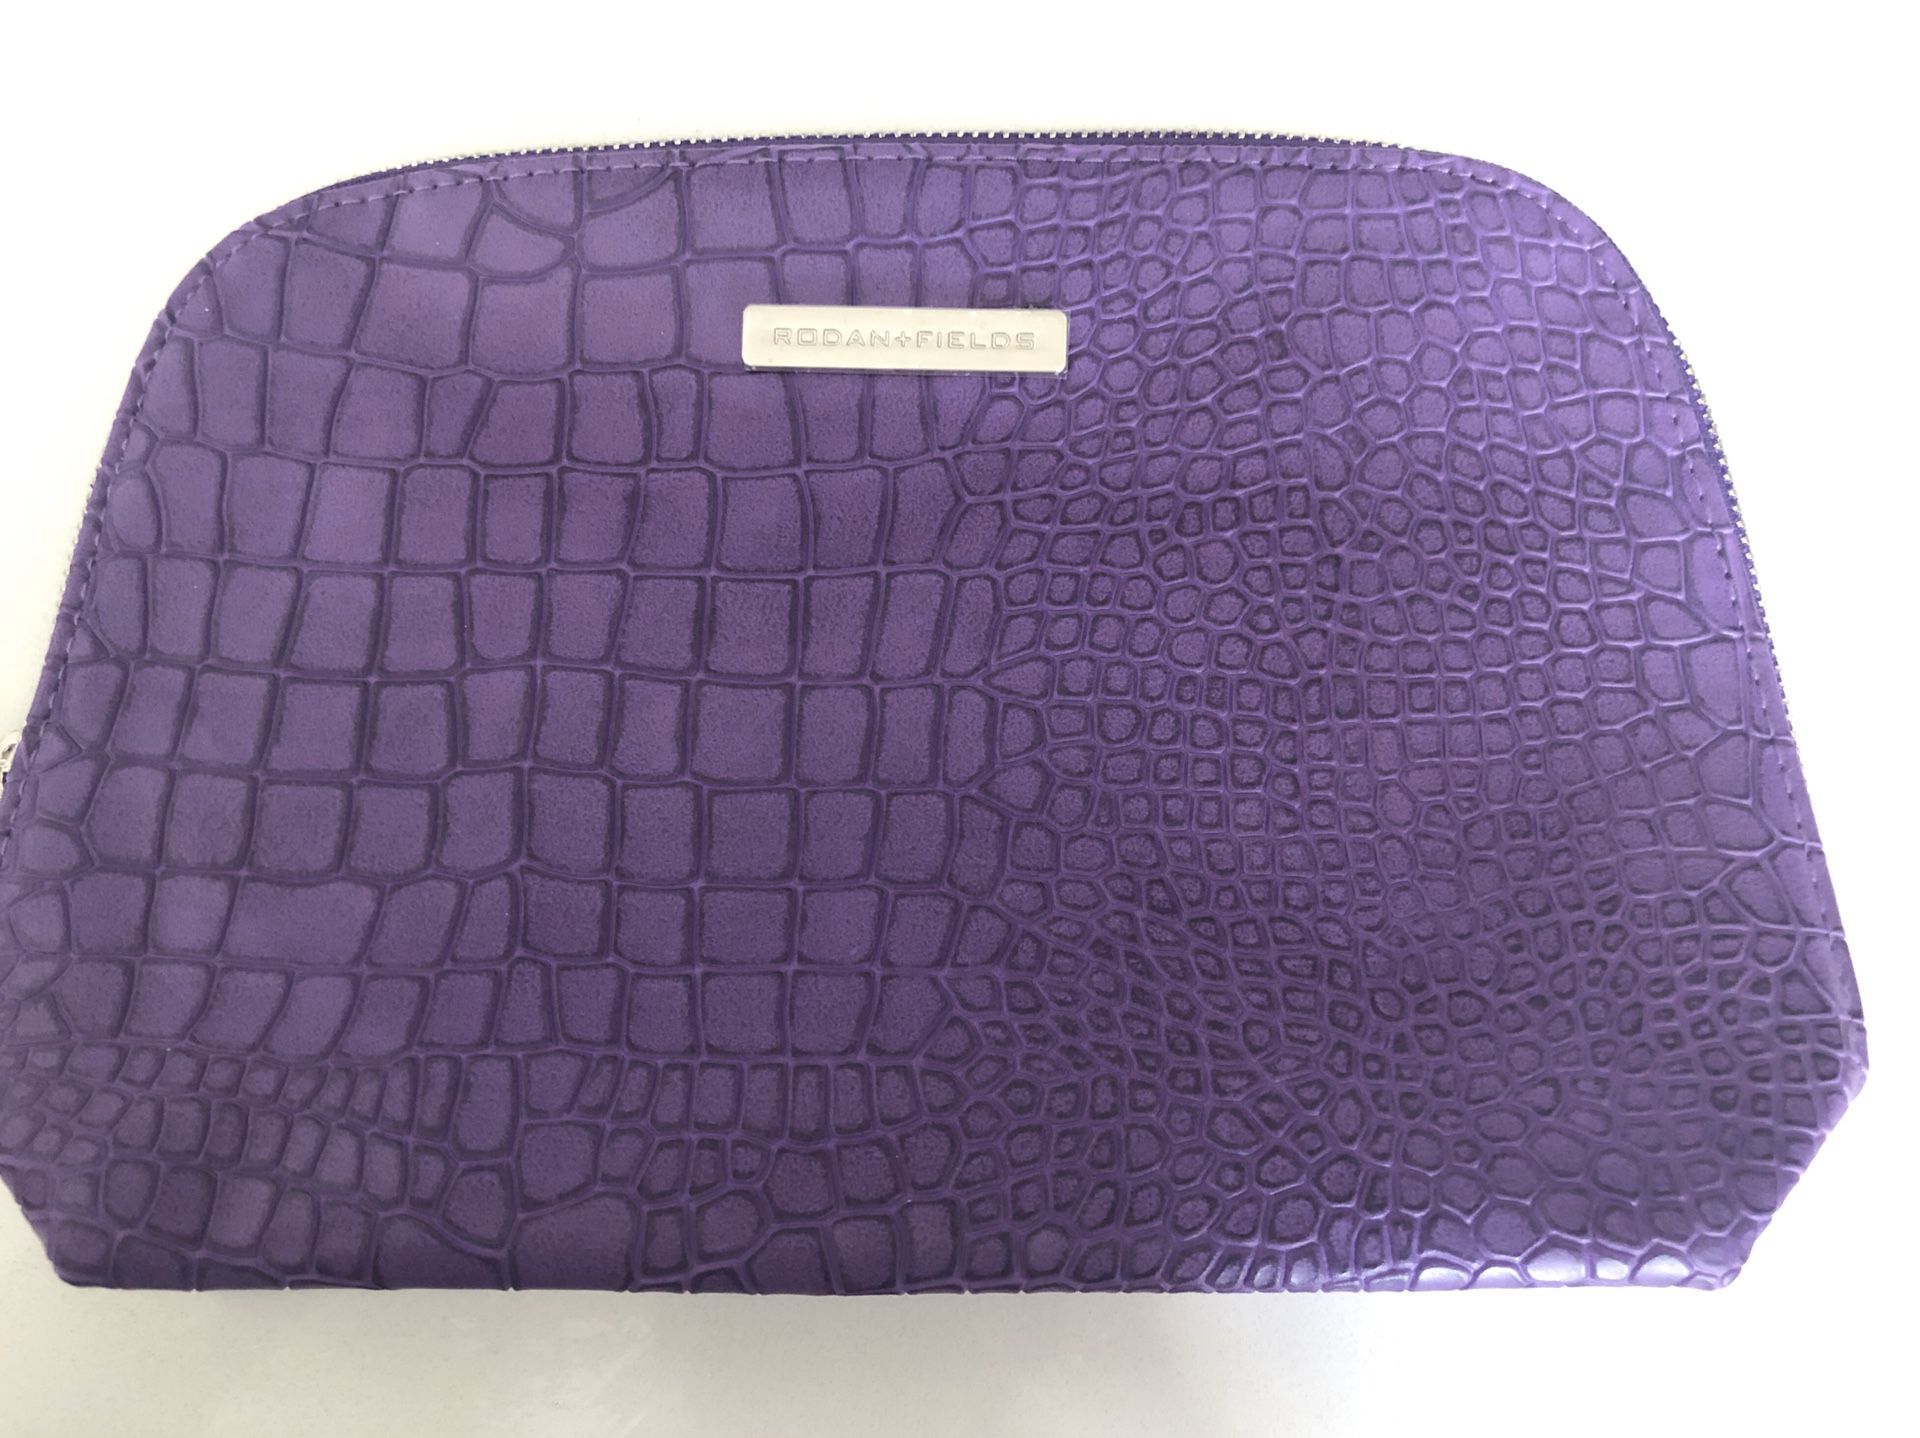 Rodan and Fields Brand New Purple Crocodile Print Makeup Bag